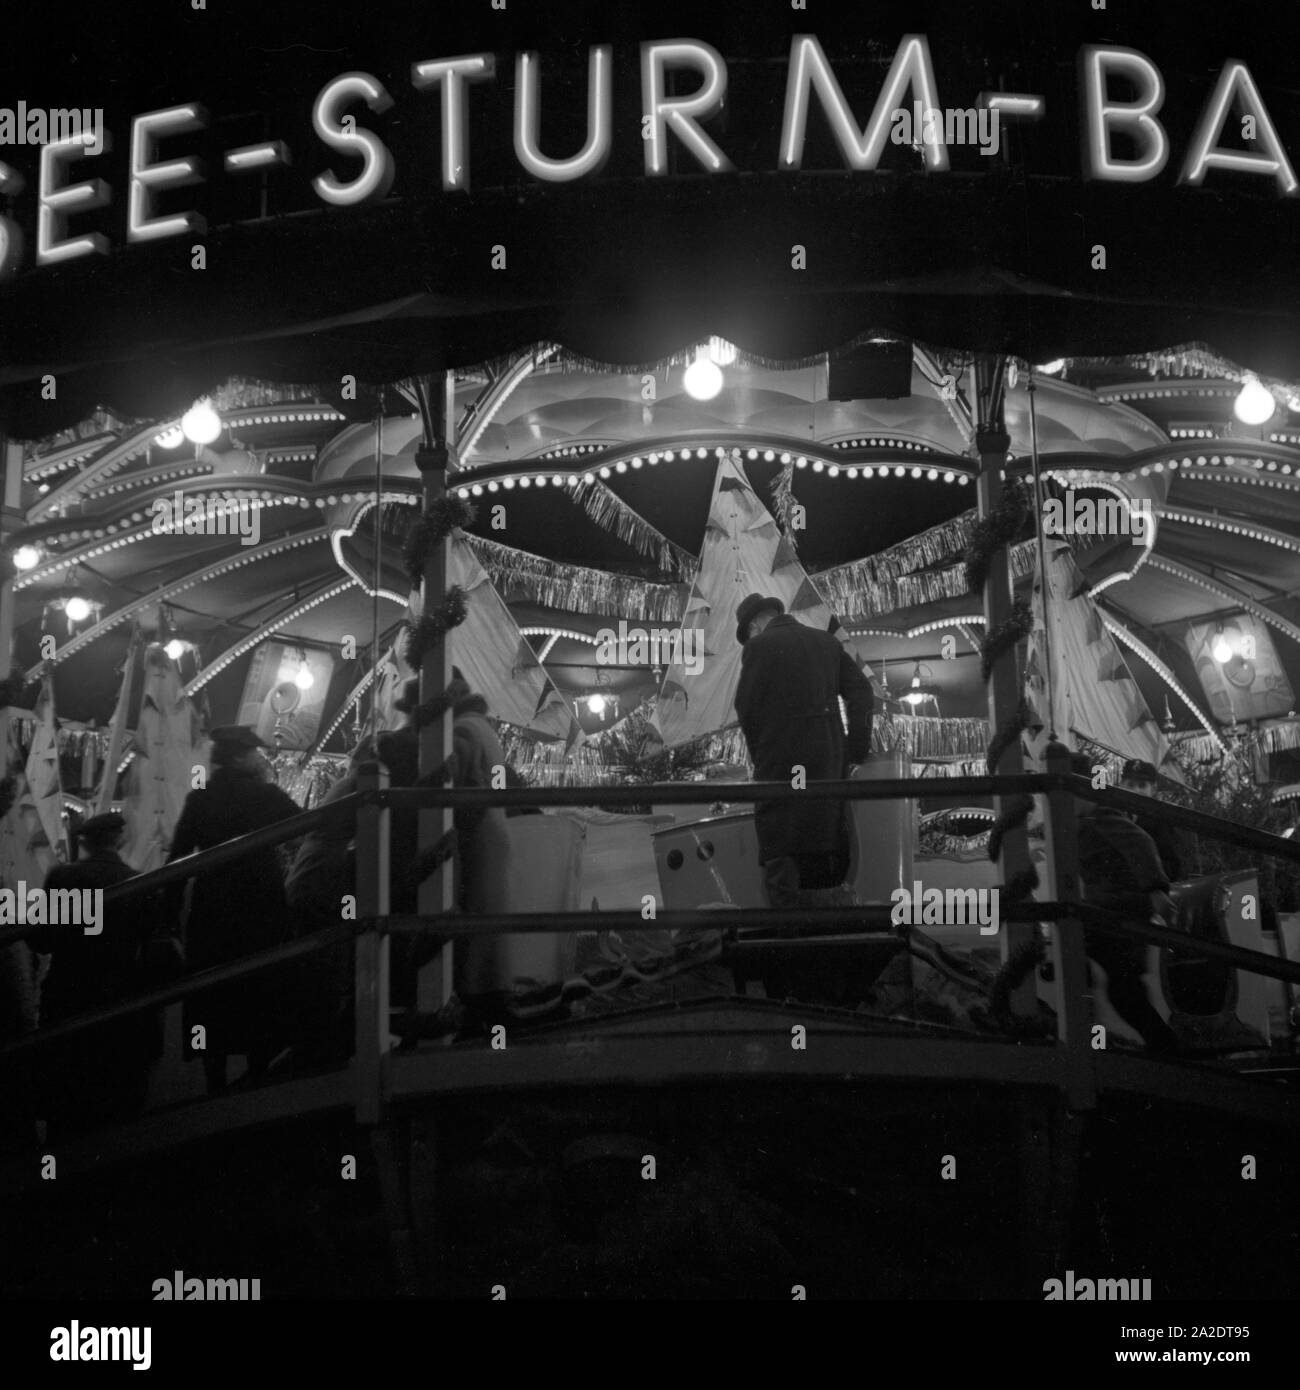 Die vedere Sturm Bahn, ein Fahrgeschäft auf dem Weihnachtsmarkt, Deutschland 1930er Jahre. La tempesta di mare ride, una fiera di attrazione a Berlino il mercato di natale, Germania 1930s. Foto Stock